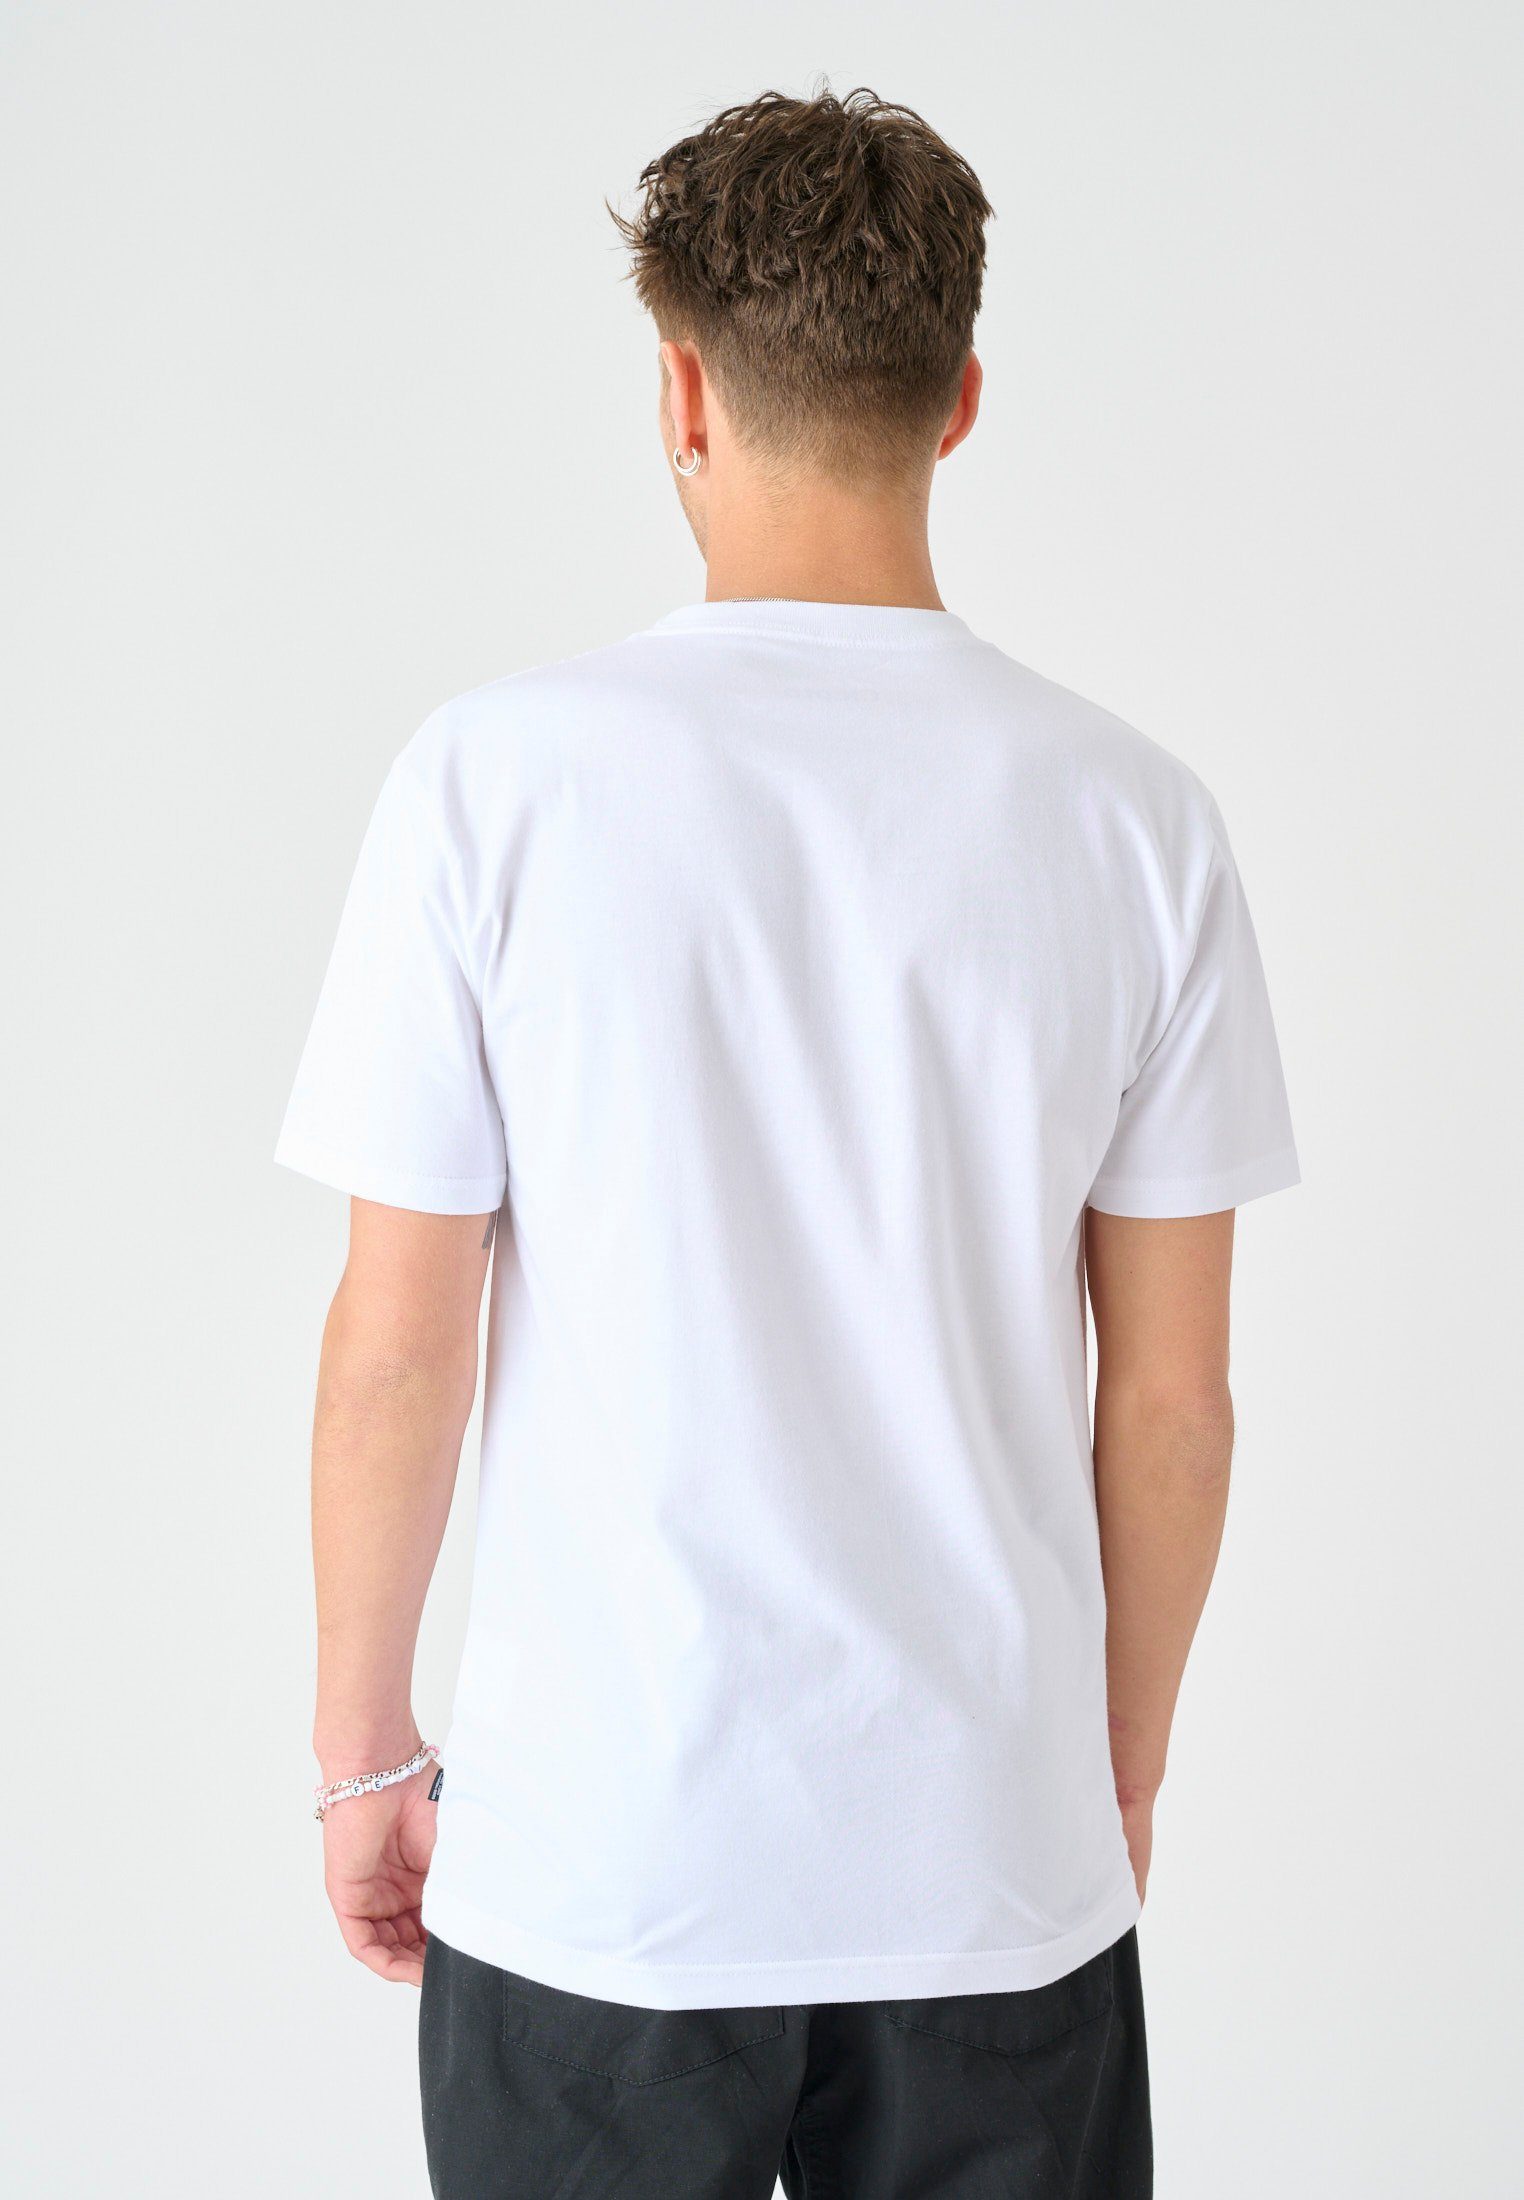 Cleptomanicx T-Shirt So Long Frontprint weiß mit großem